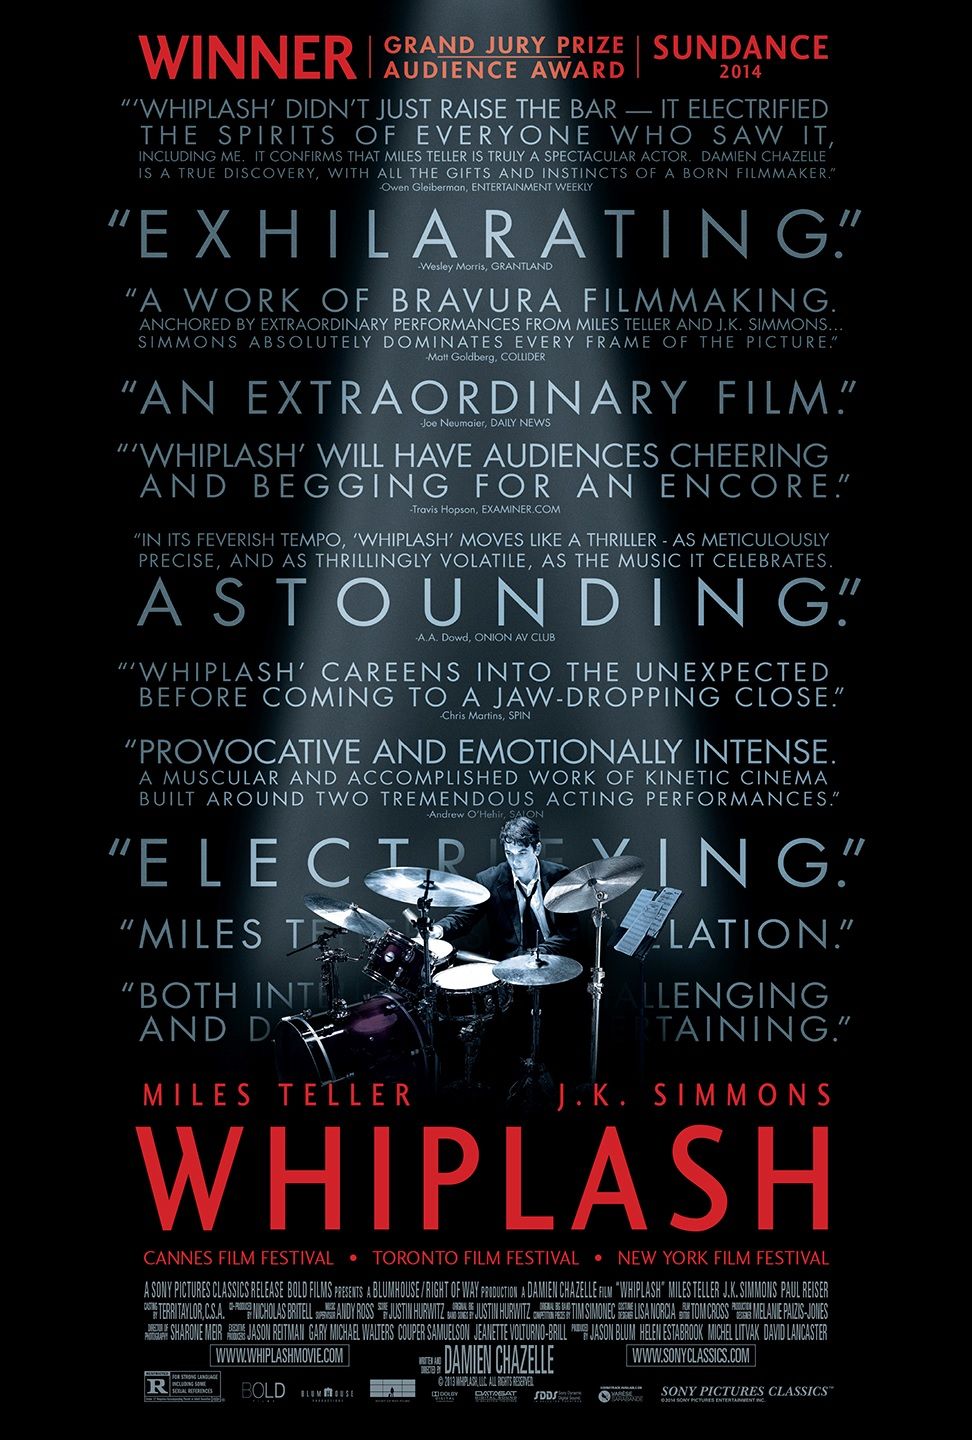 Whiplash - Movie Poster - Top 10 Films 2015